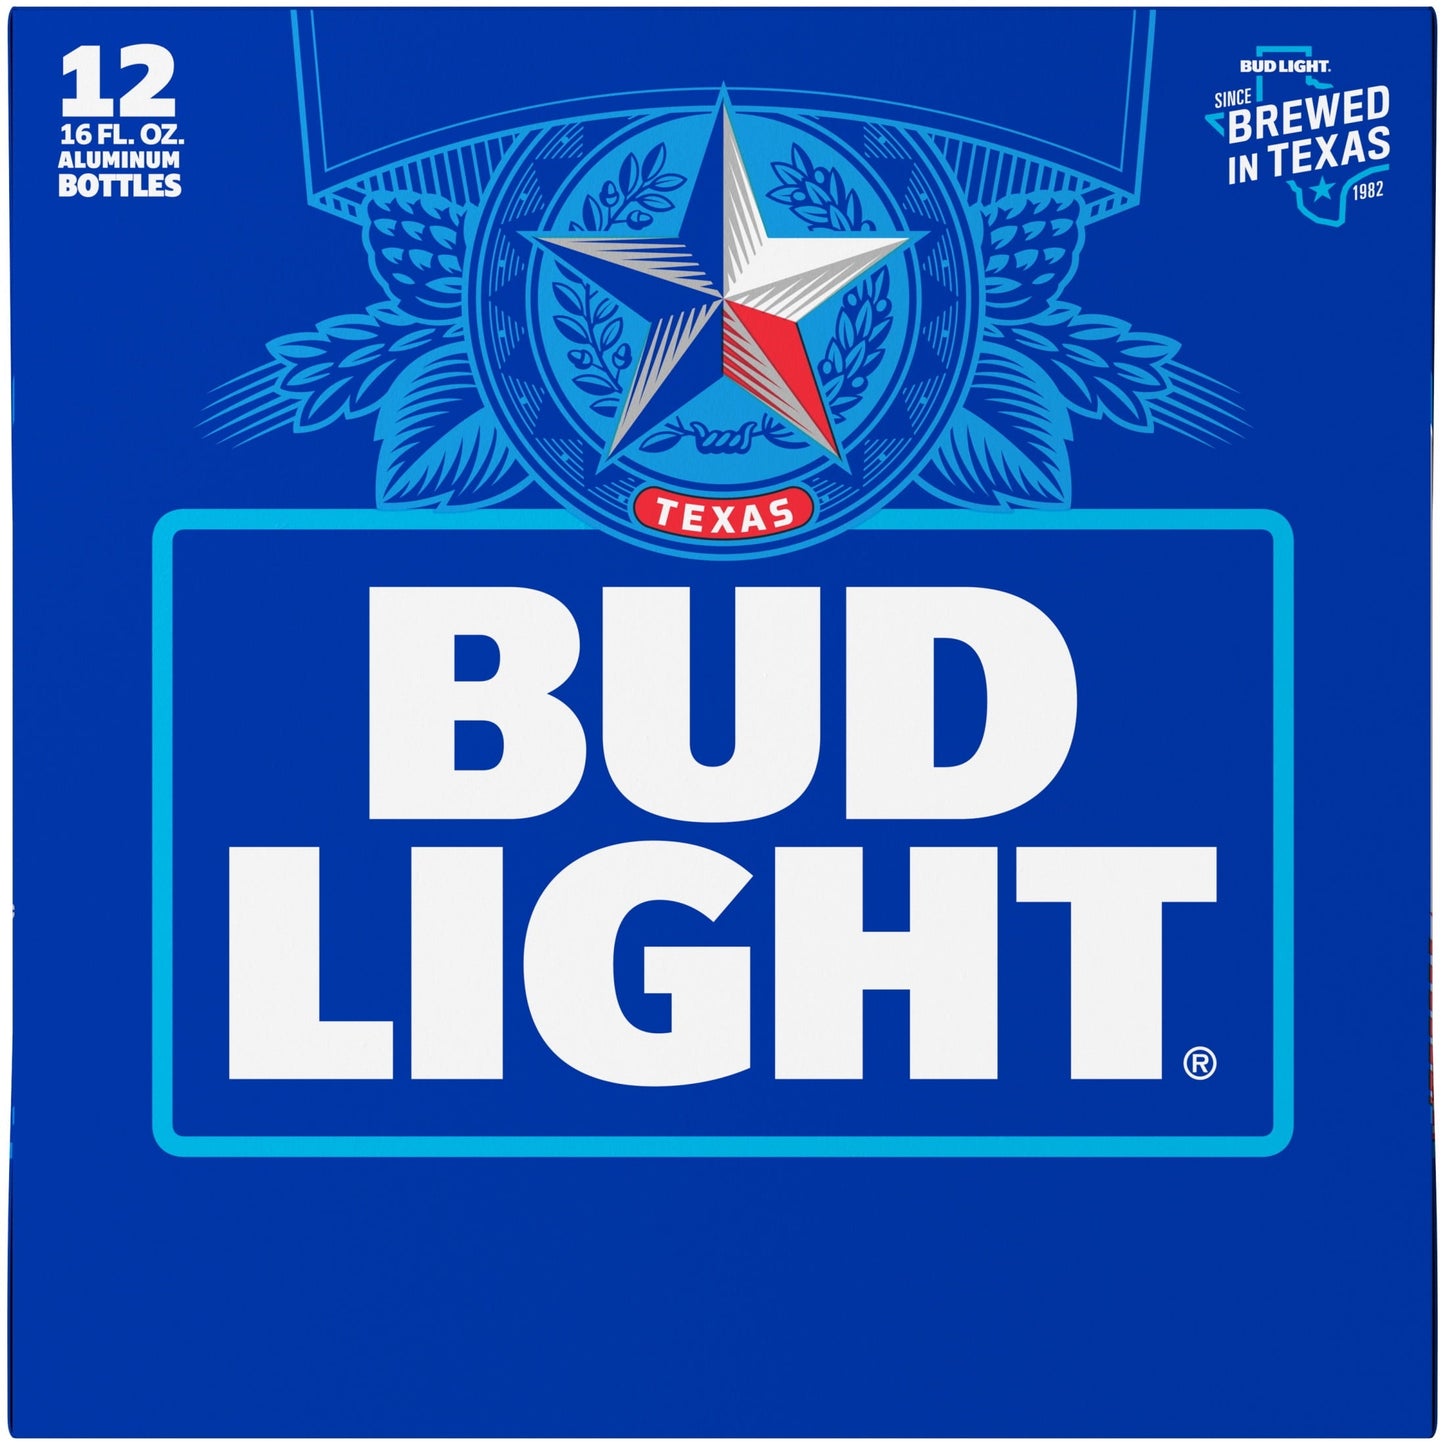 Bud Light Beer, 12 Pack Beer, 16 fl oz Glass Bottles, 4.2% ABV, Domestic Lager